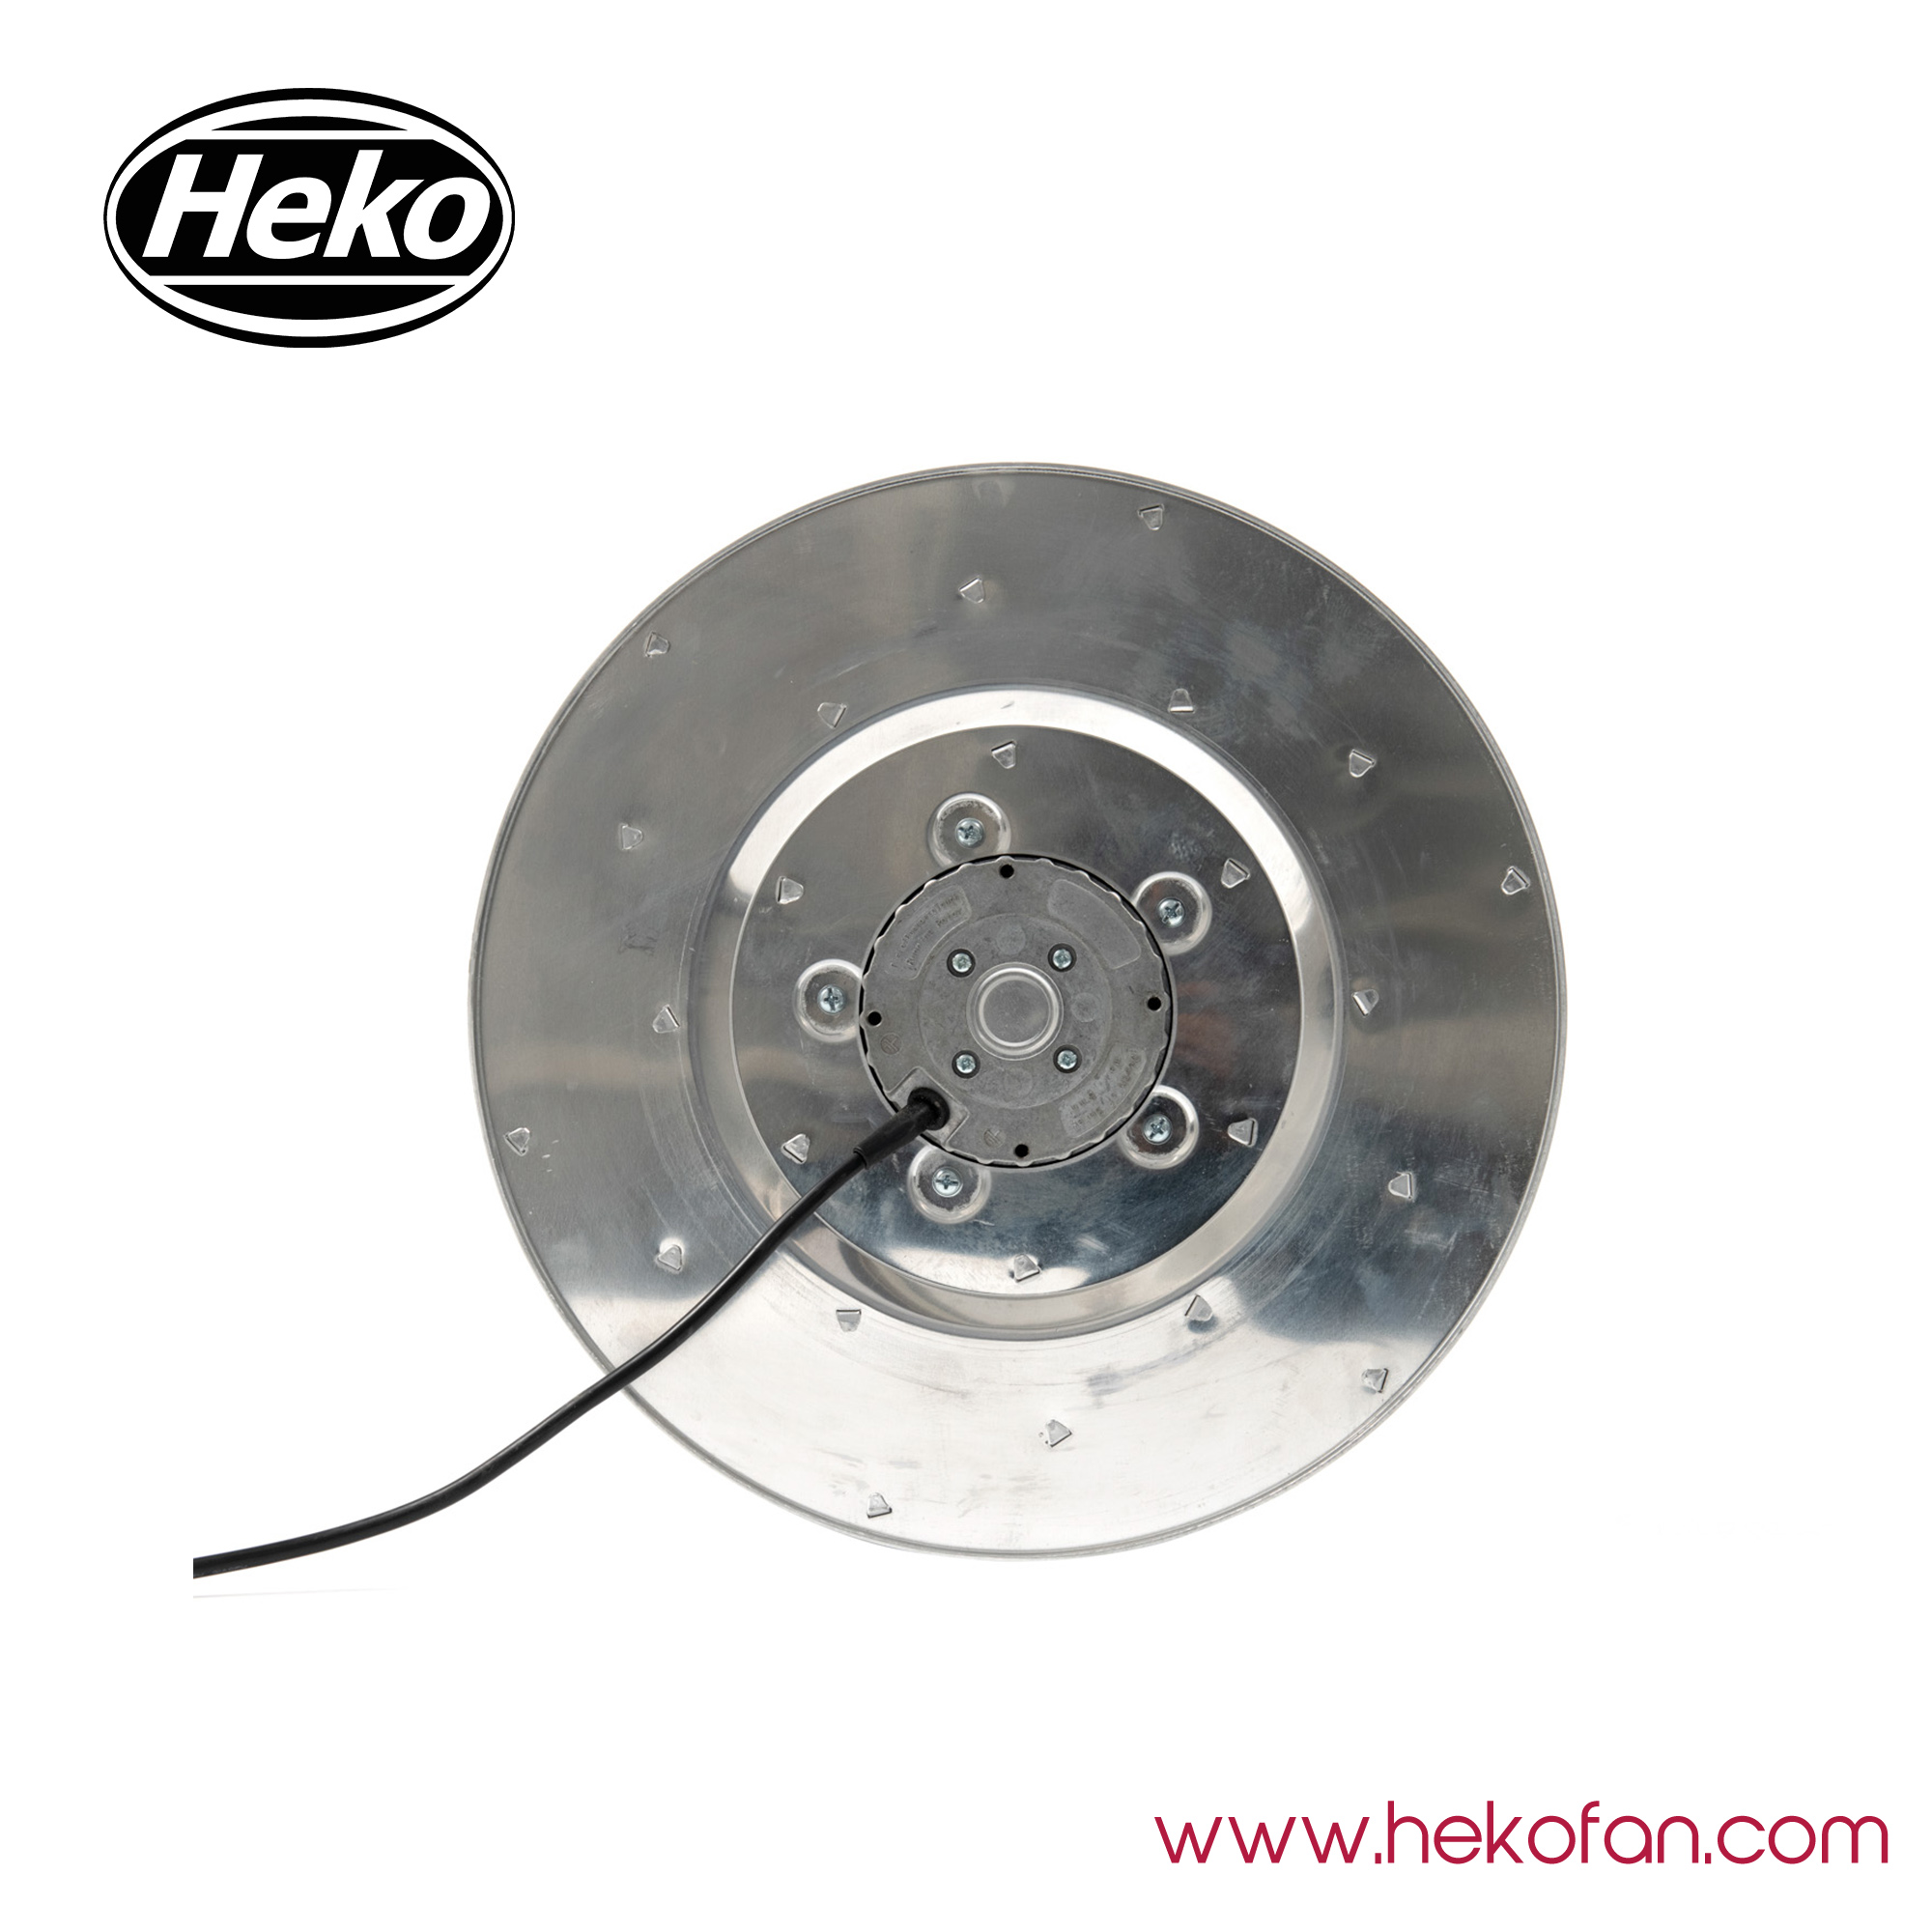 HEKO DC102mm High Pressure Blowers Centrifugal Fan